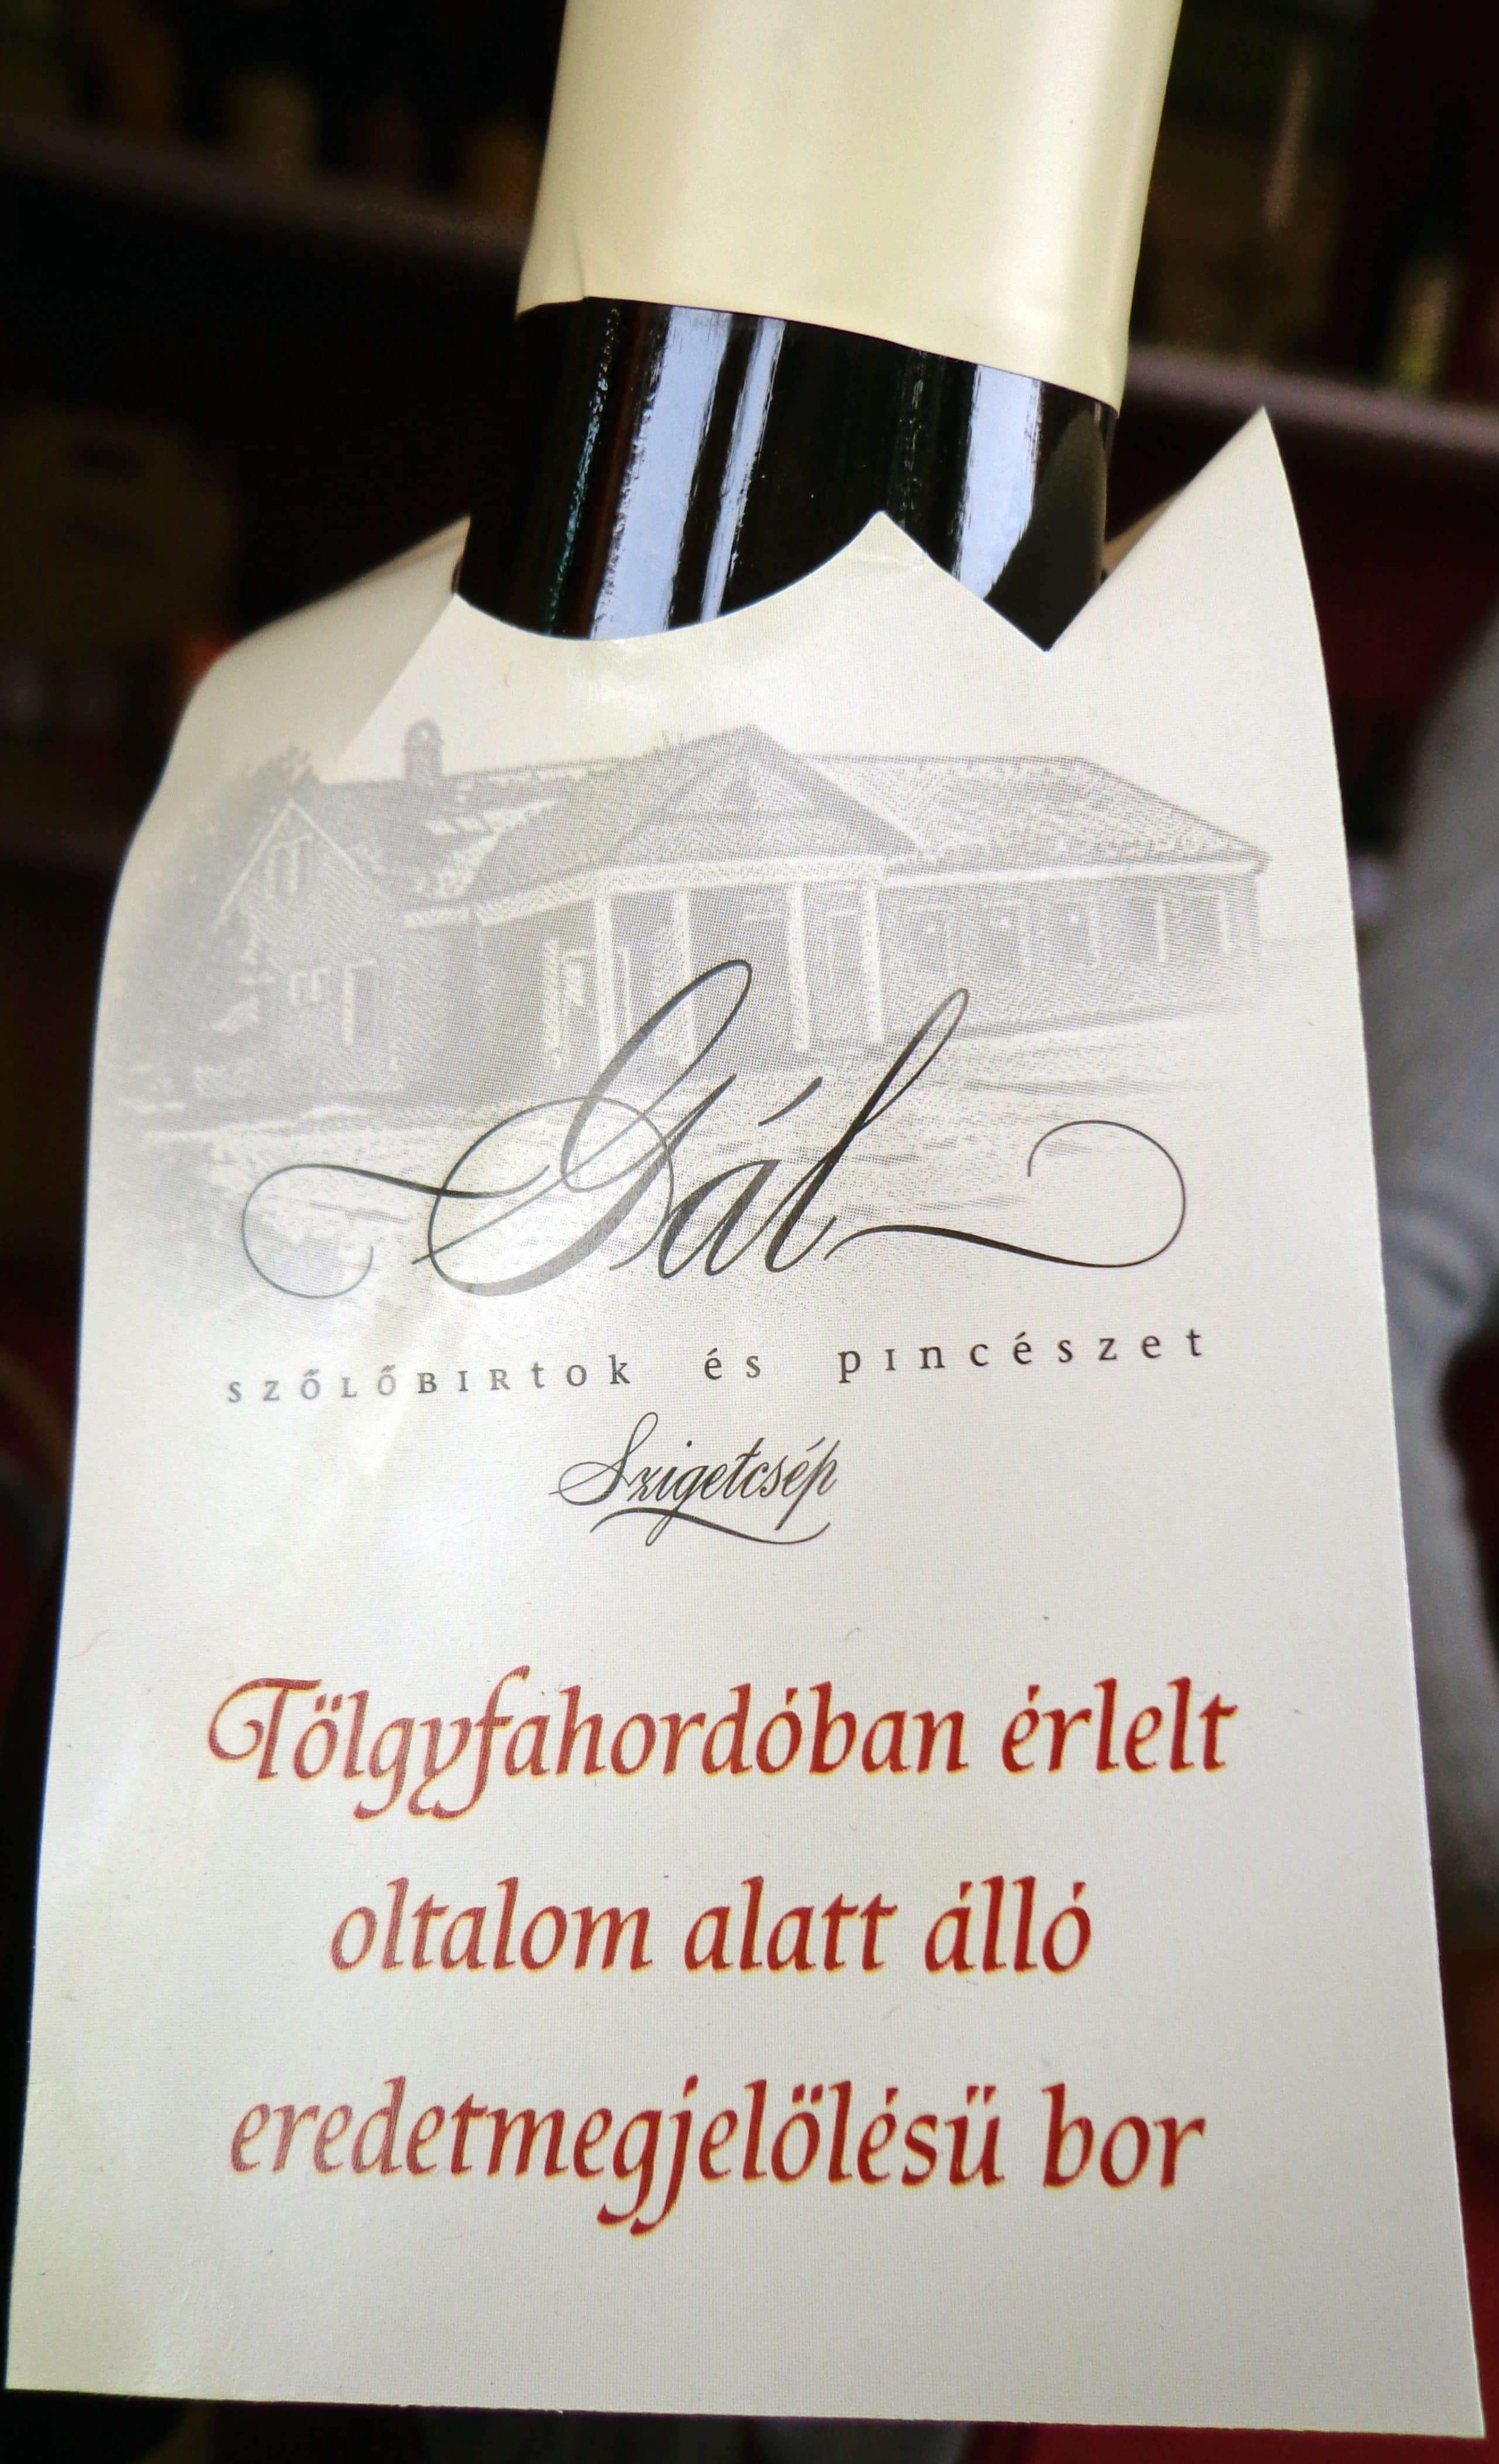 Chardonnay label